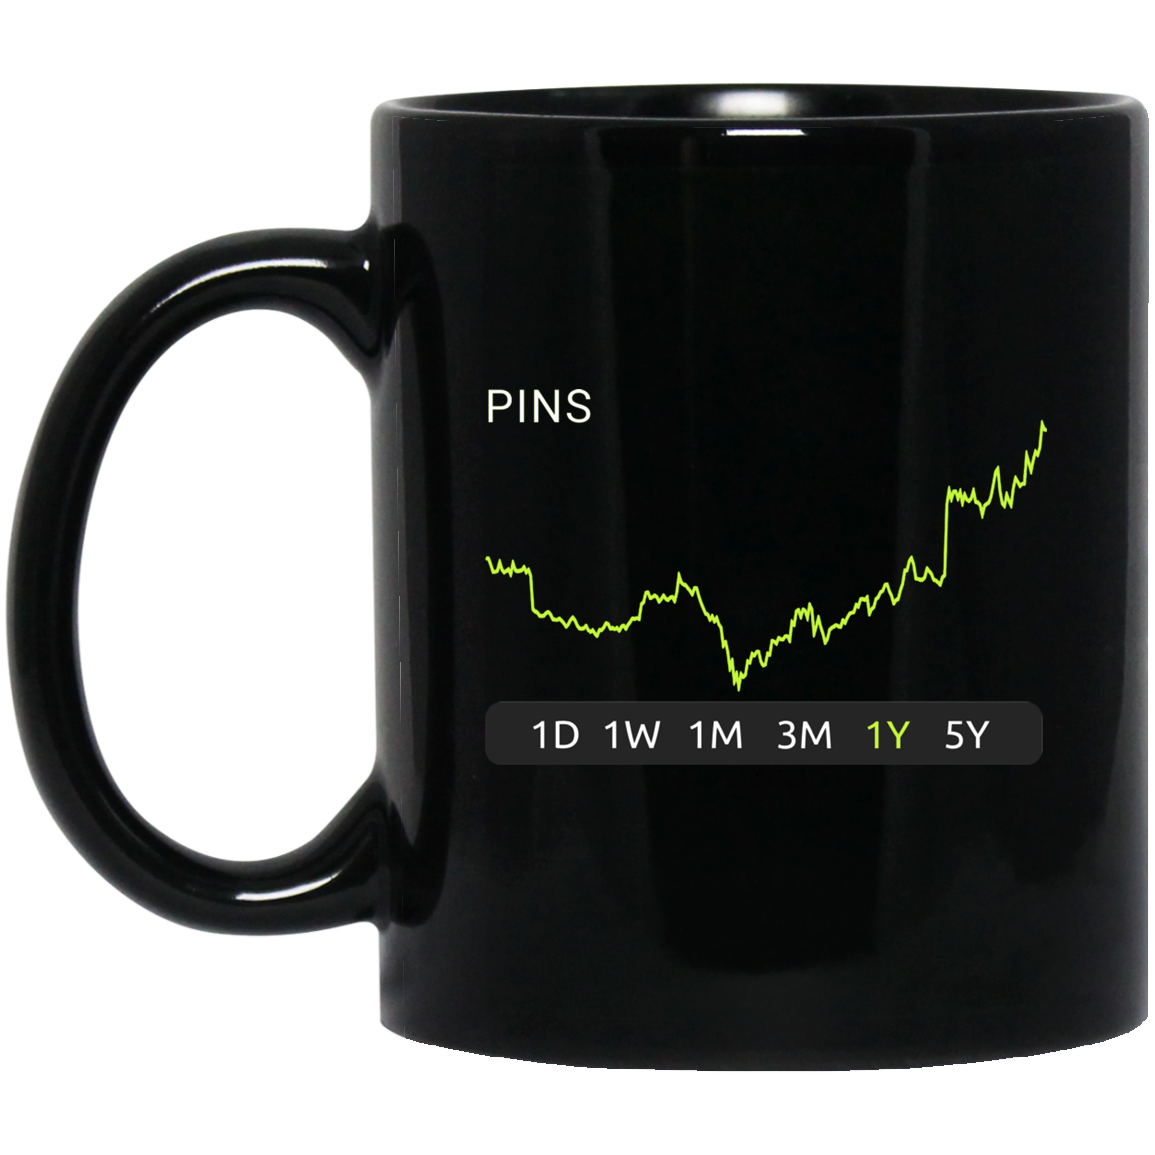 PINS Stock 1y Mug